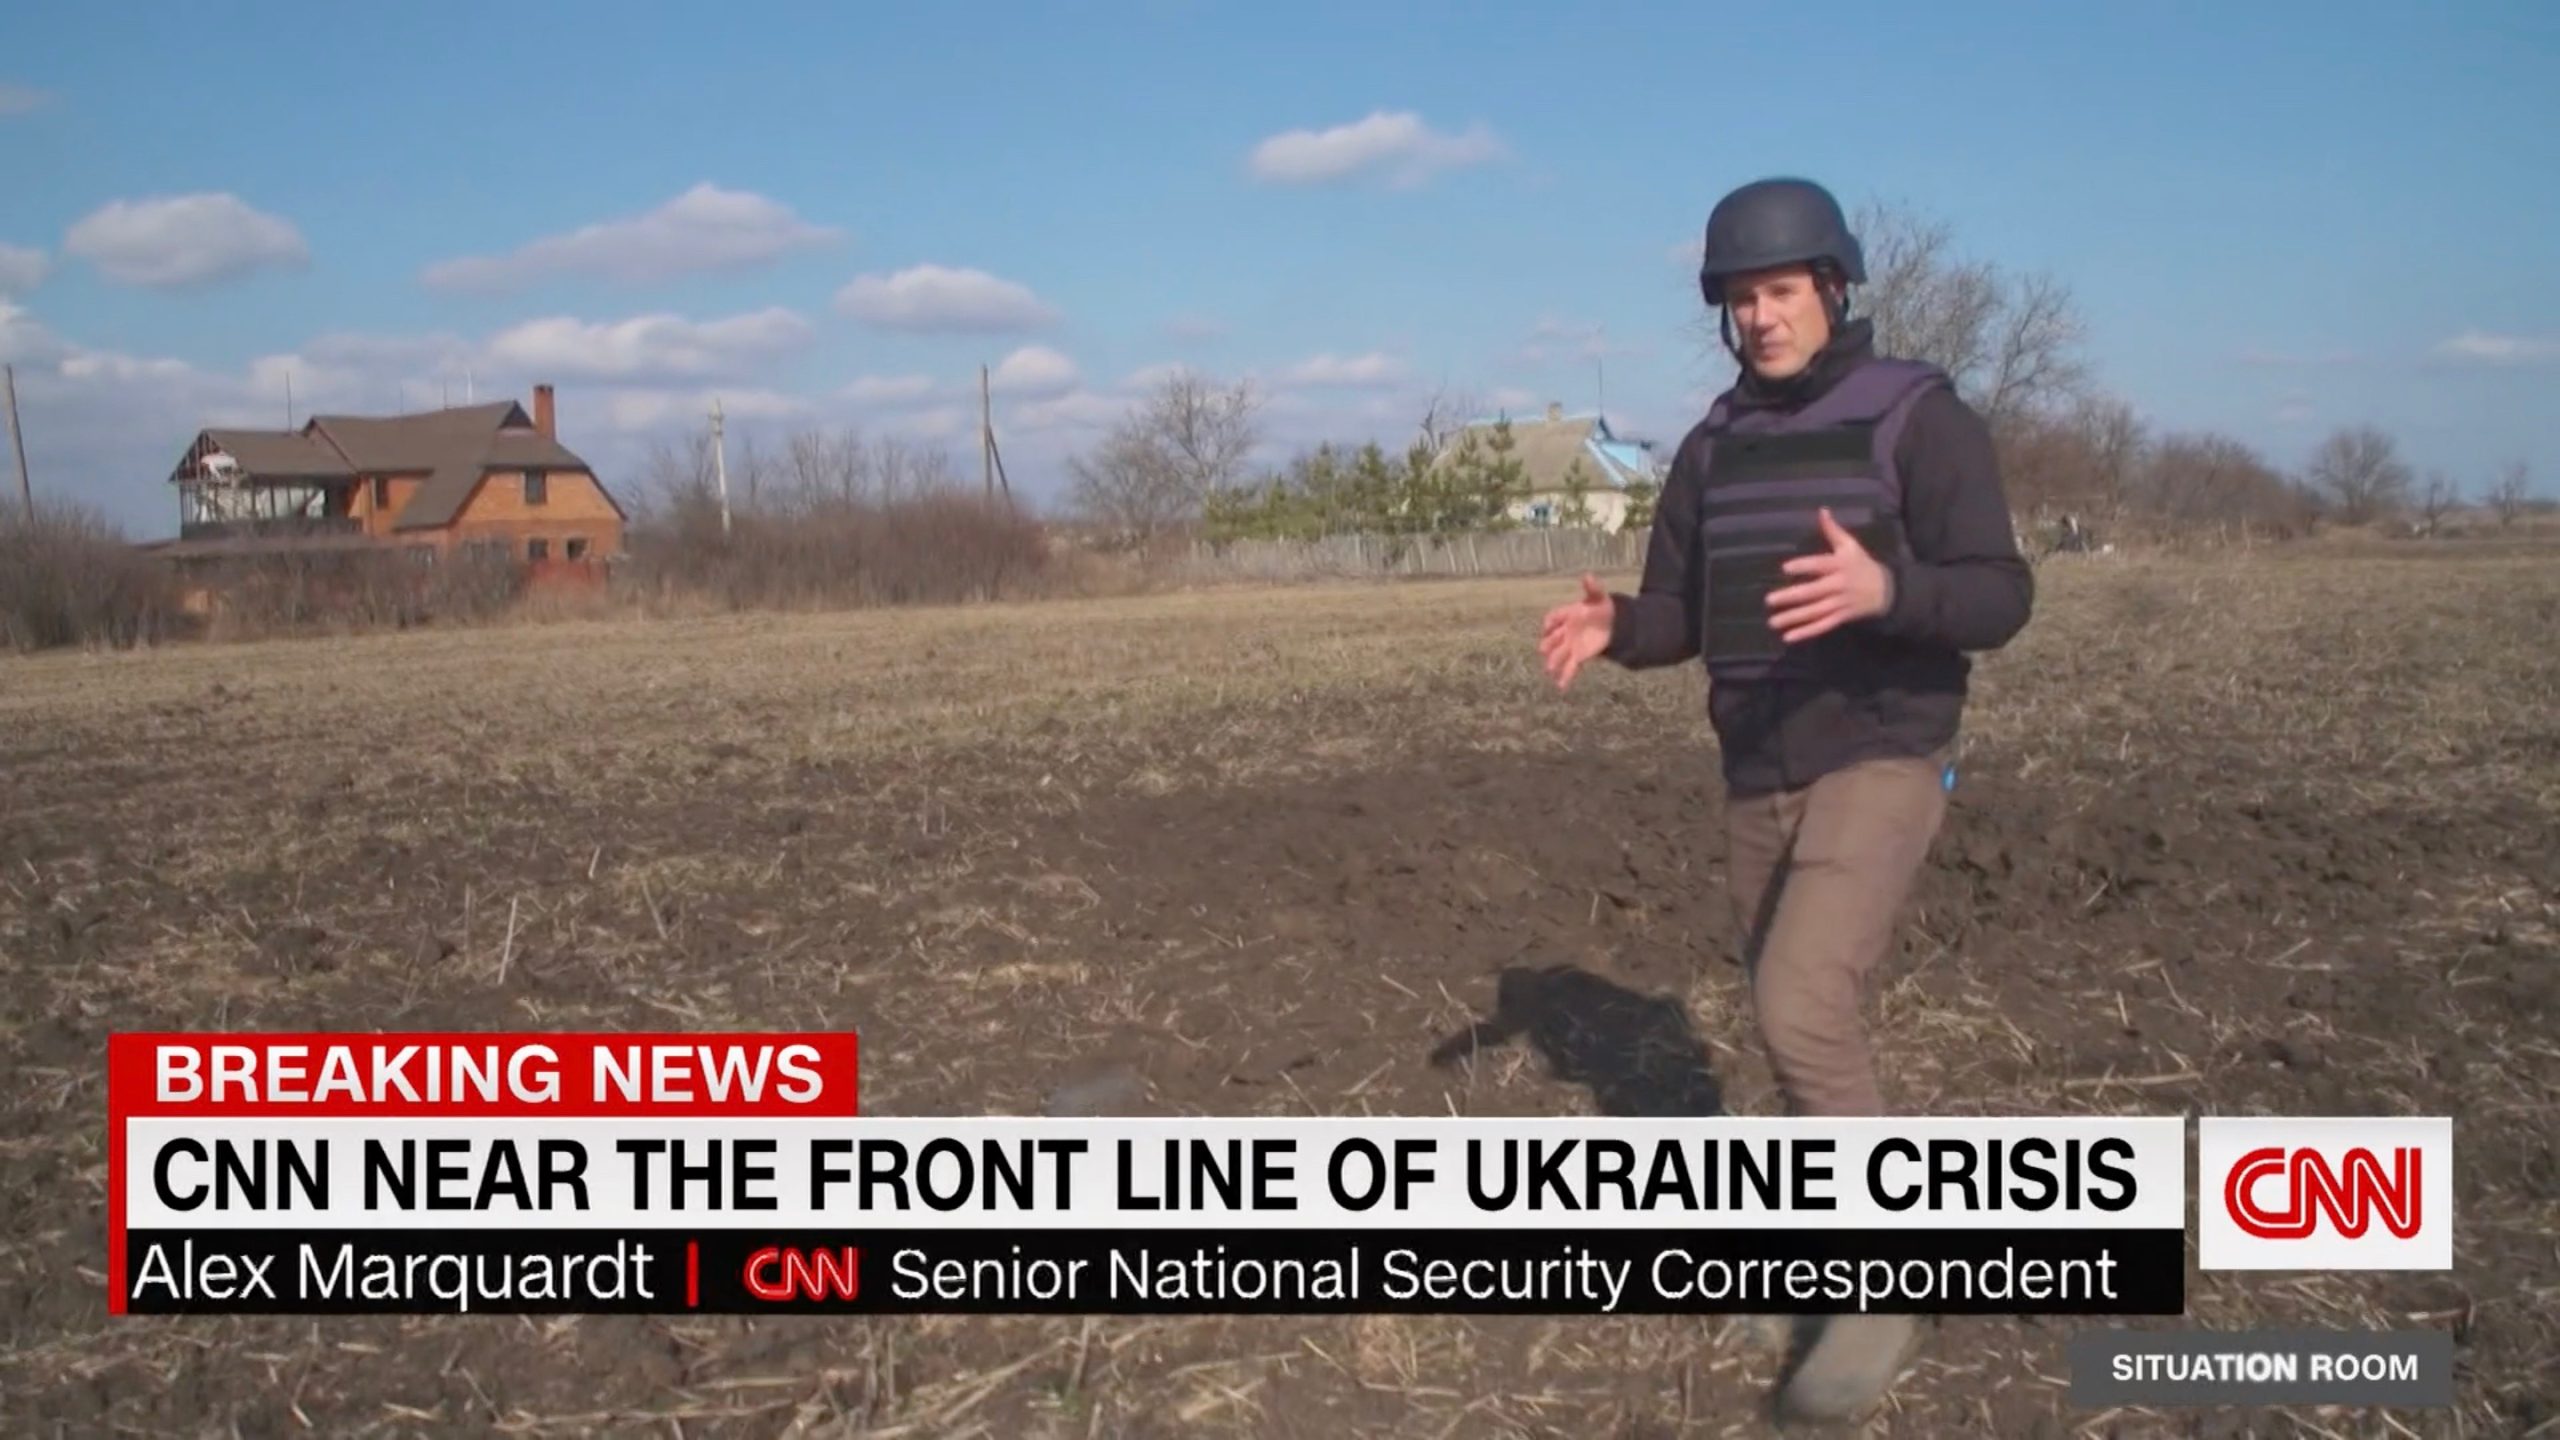 A screenshot from a CNN segment featuring CNN Senior National Security Correspondent Alex Marquardt (SFS’04) wearing protective gear and walking through an open field